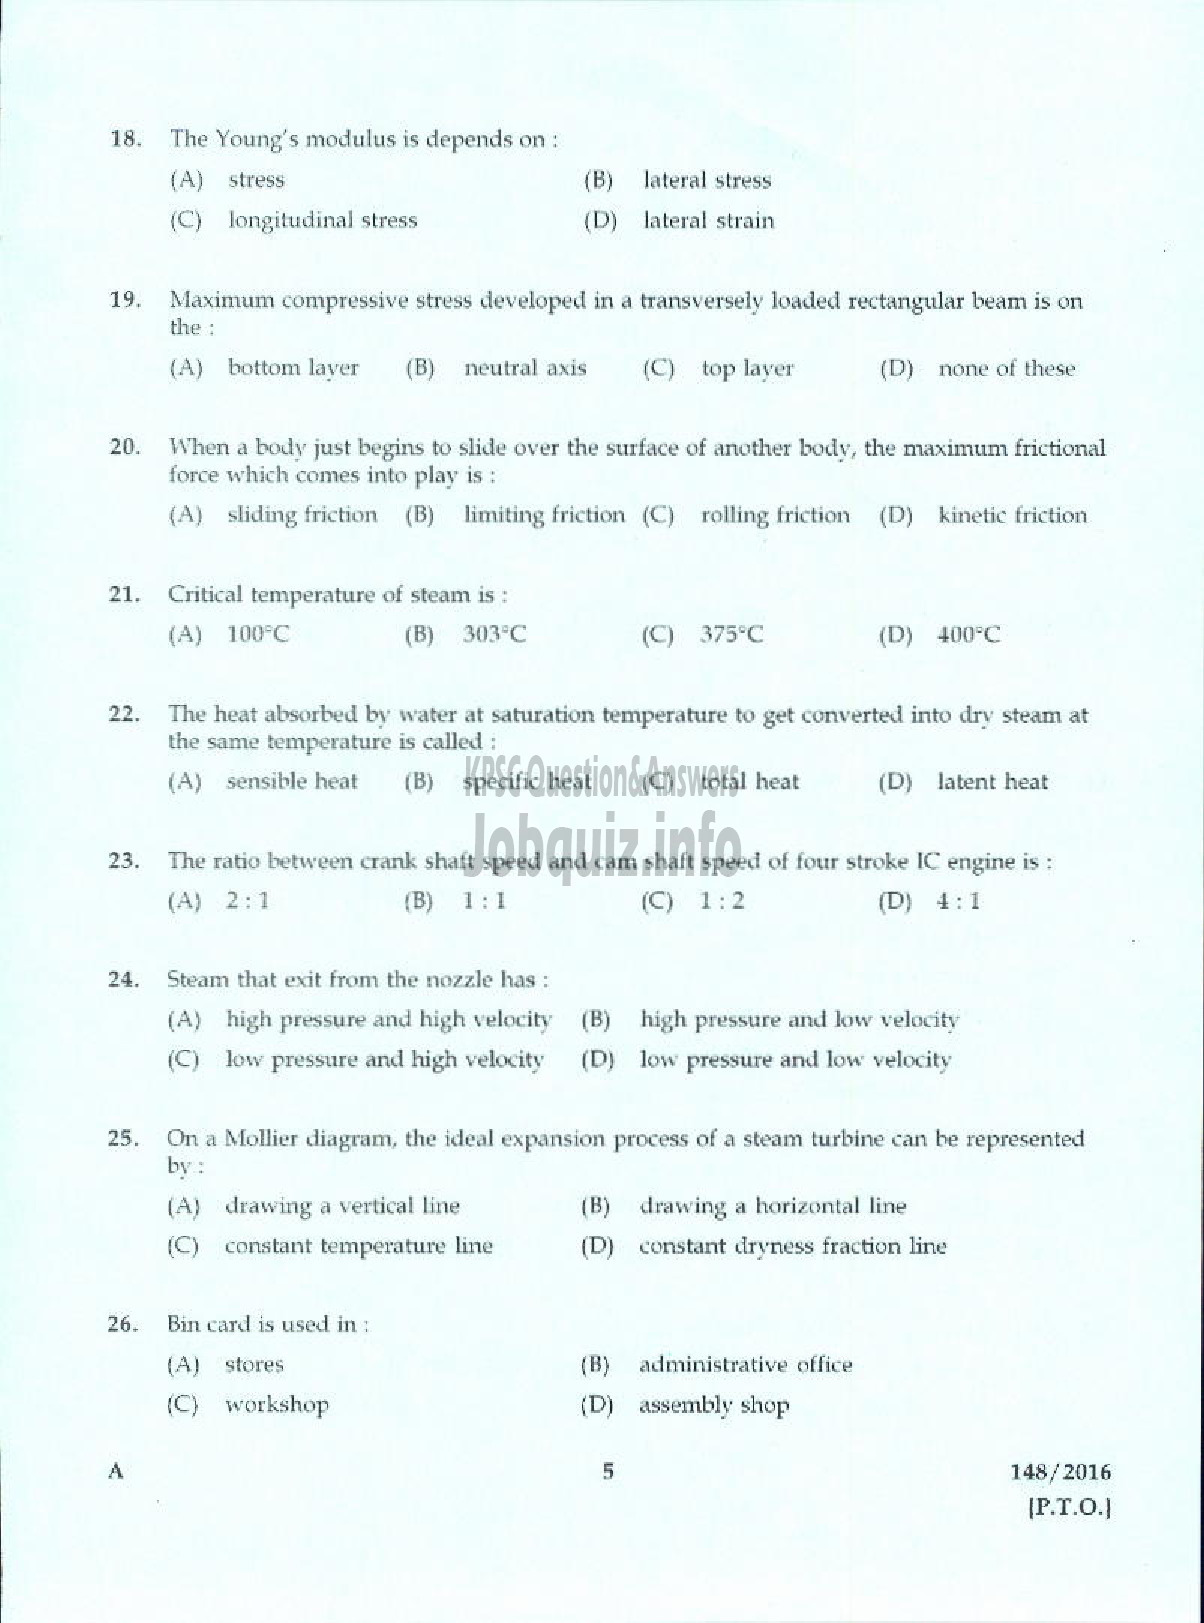 Kerala PSC Question Paper - FOREMAN CENTRAL WORKSHOP MEDICAL EDUCATION-3